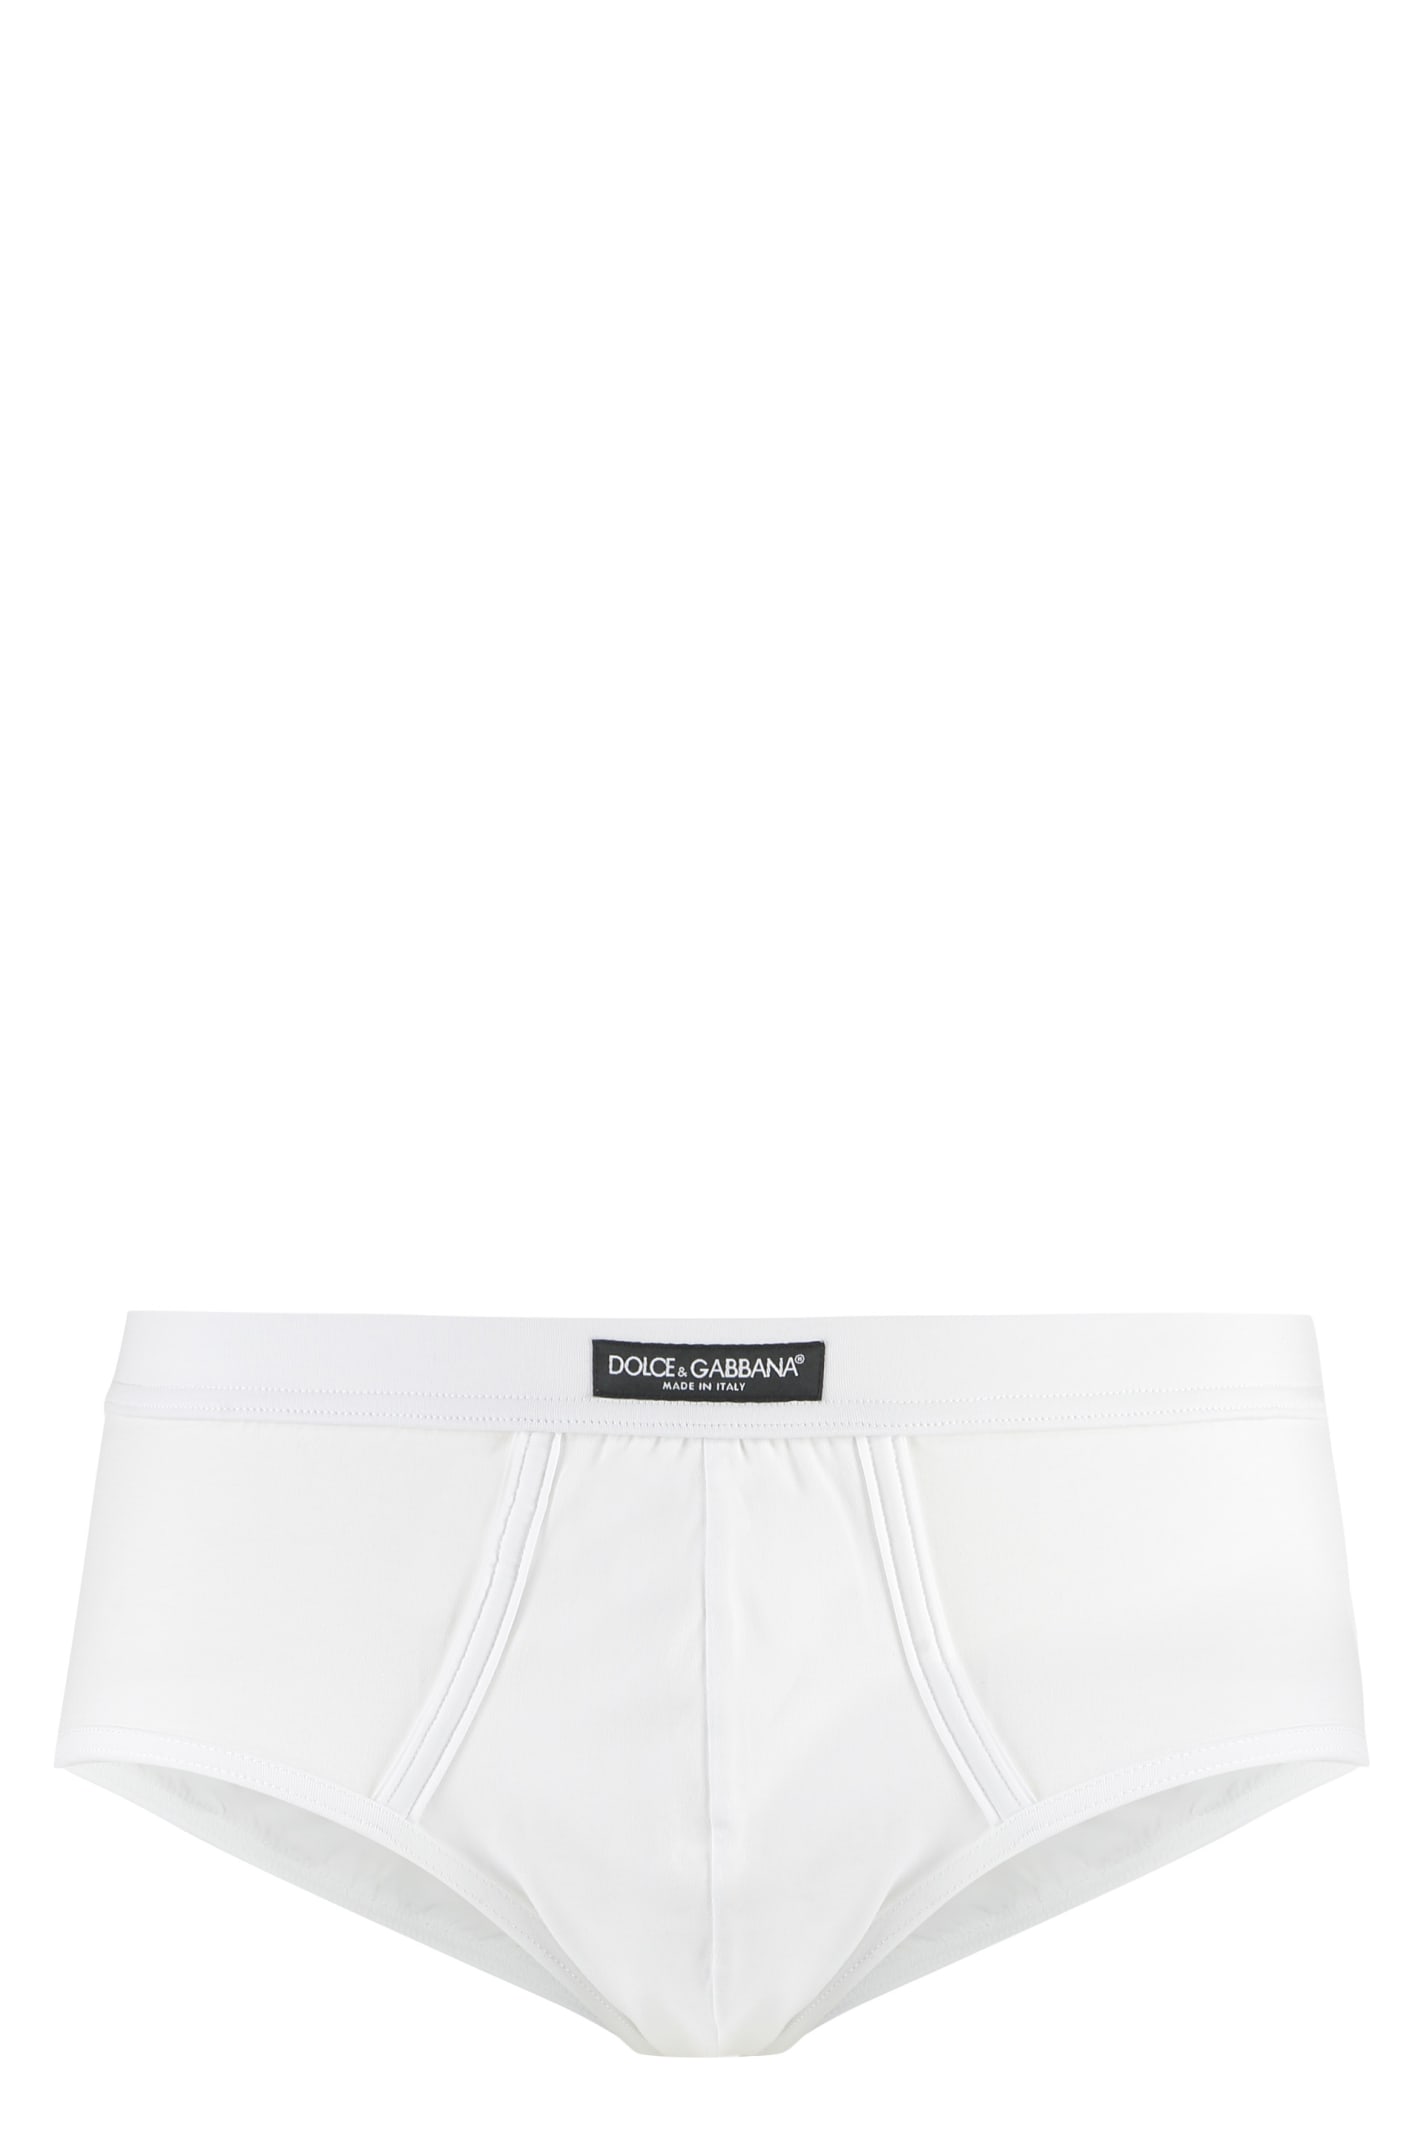 Dolce & Gabbana Plain Color Briefs In White